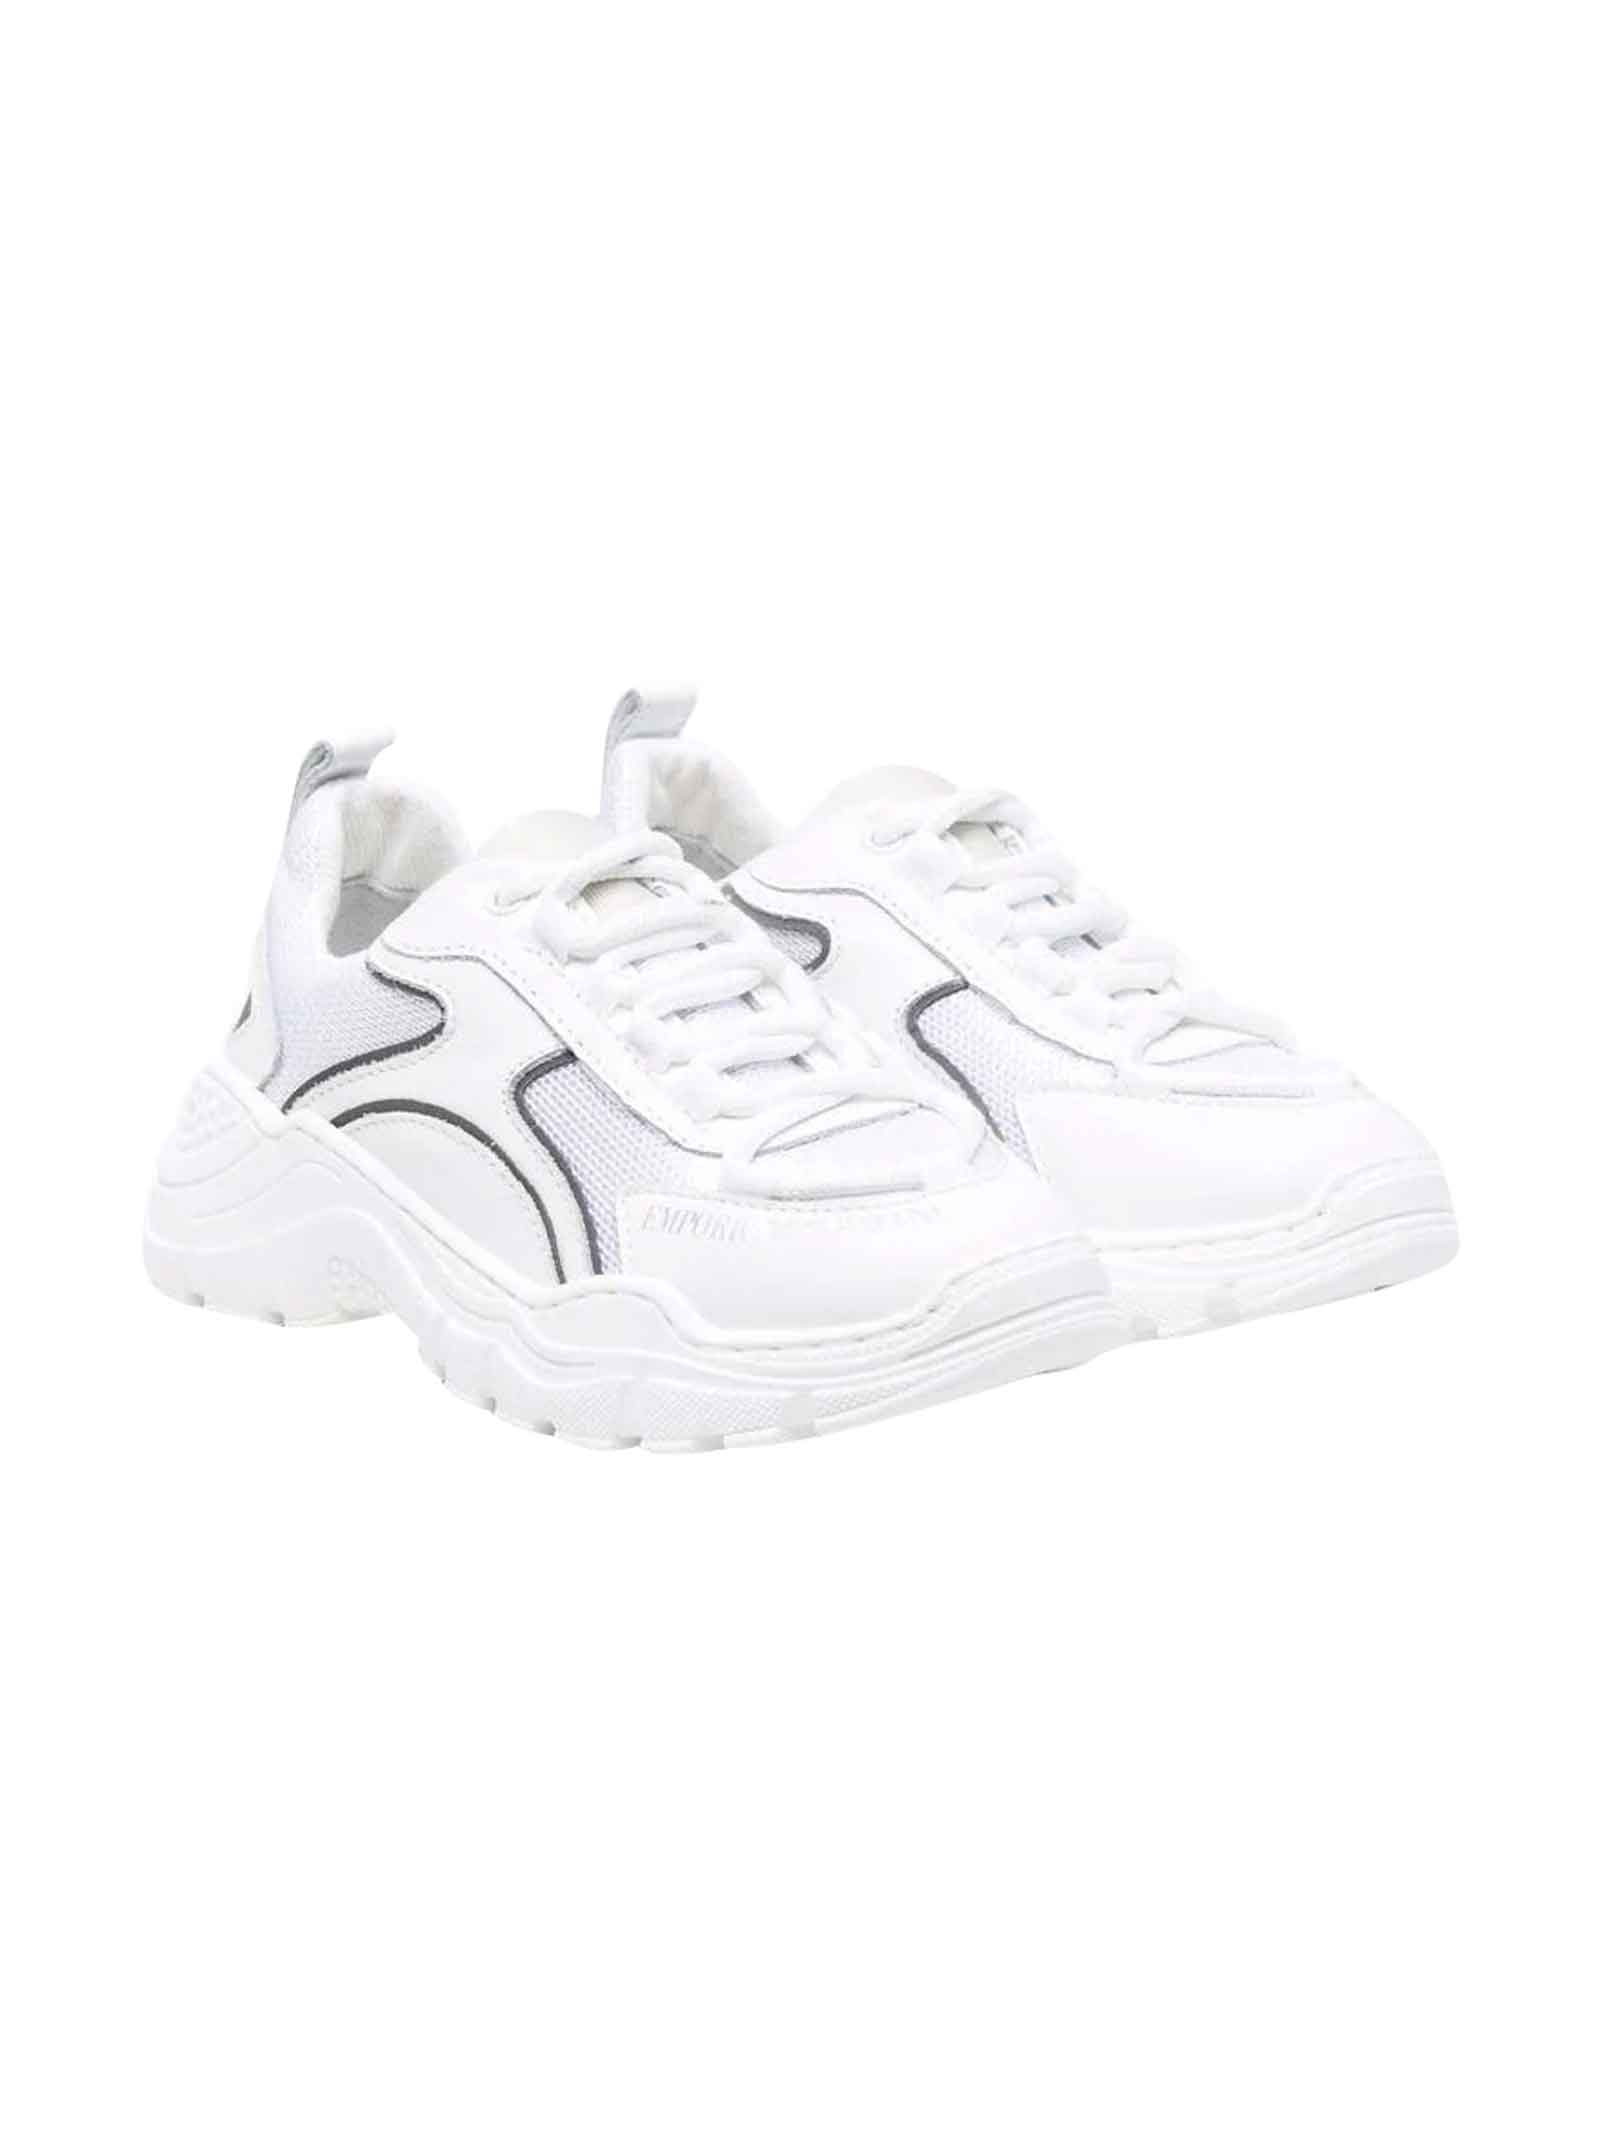 Emporio Armani White Sneakers With Black Details